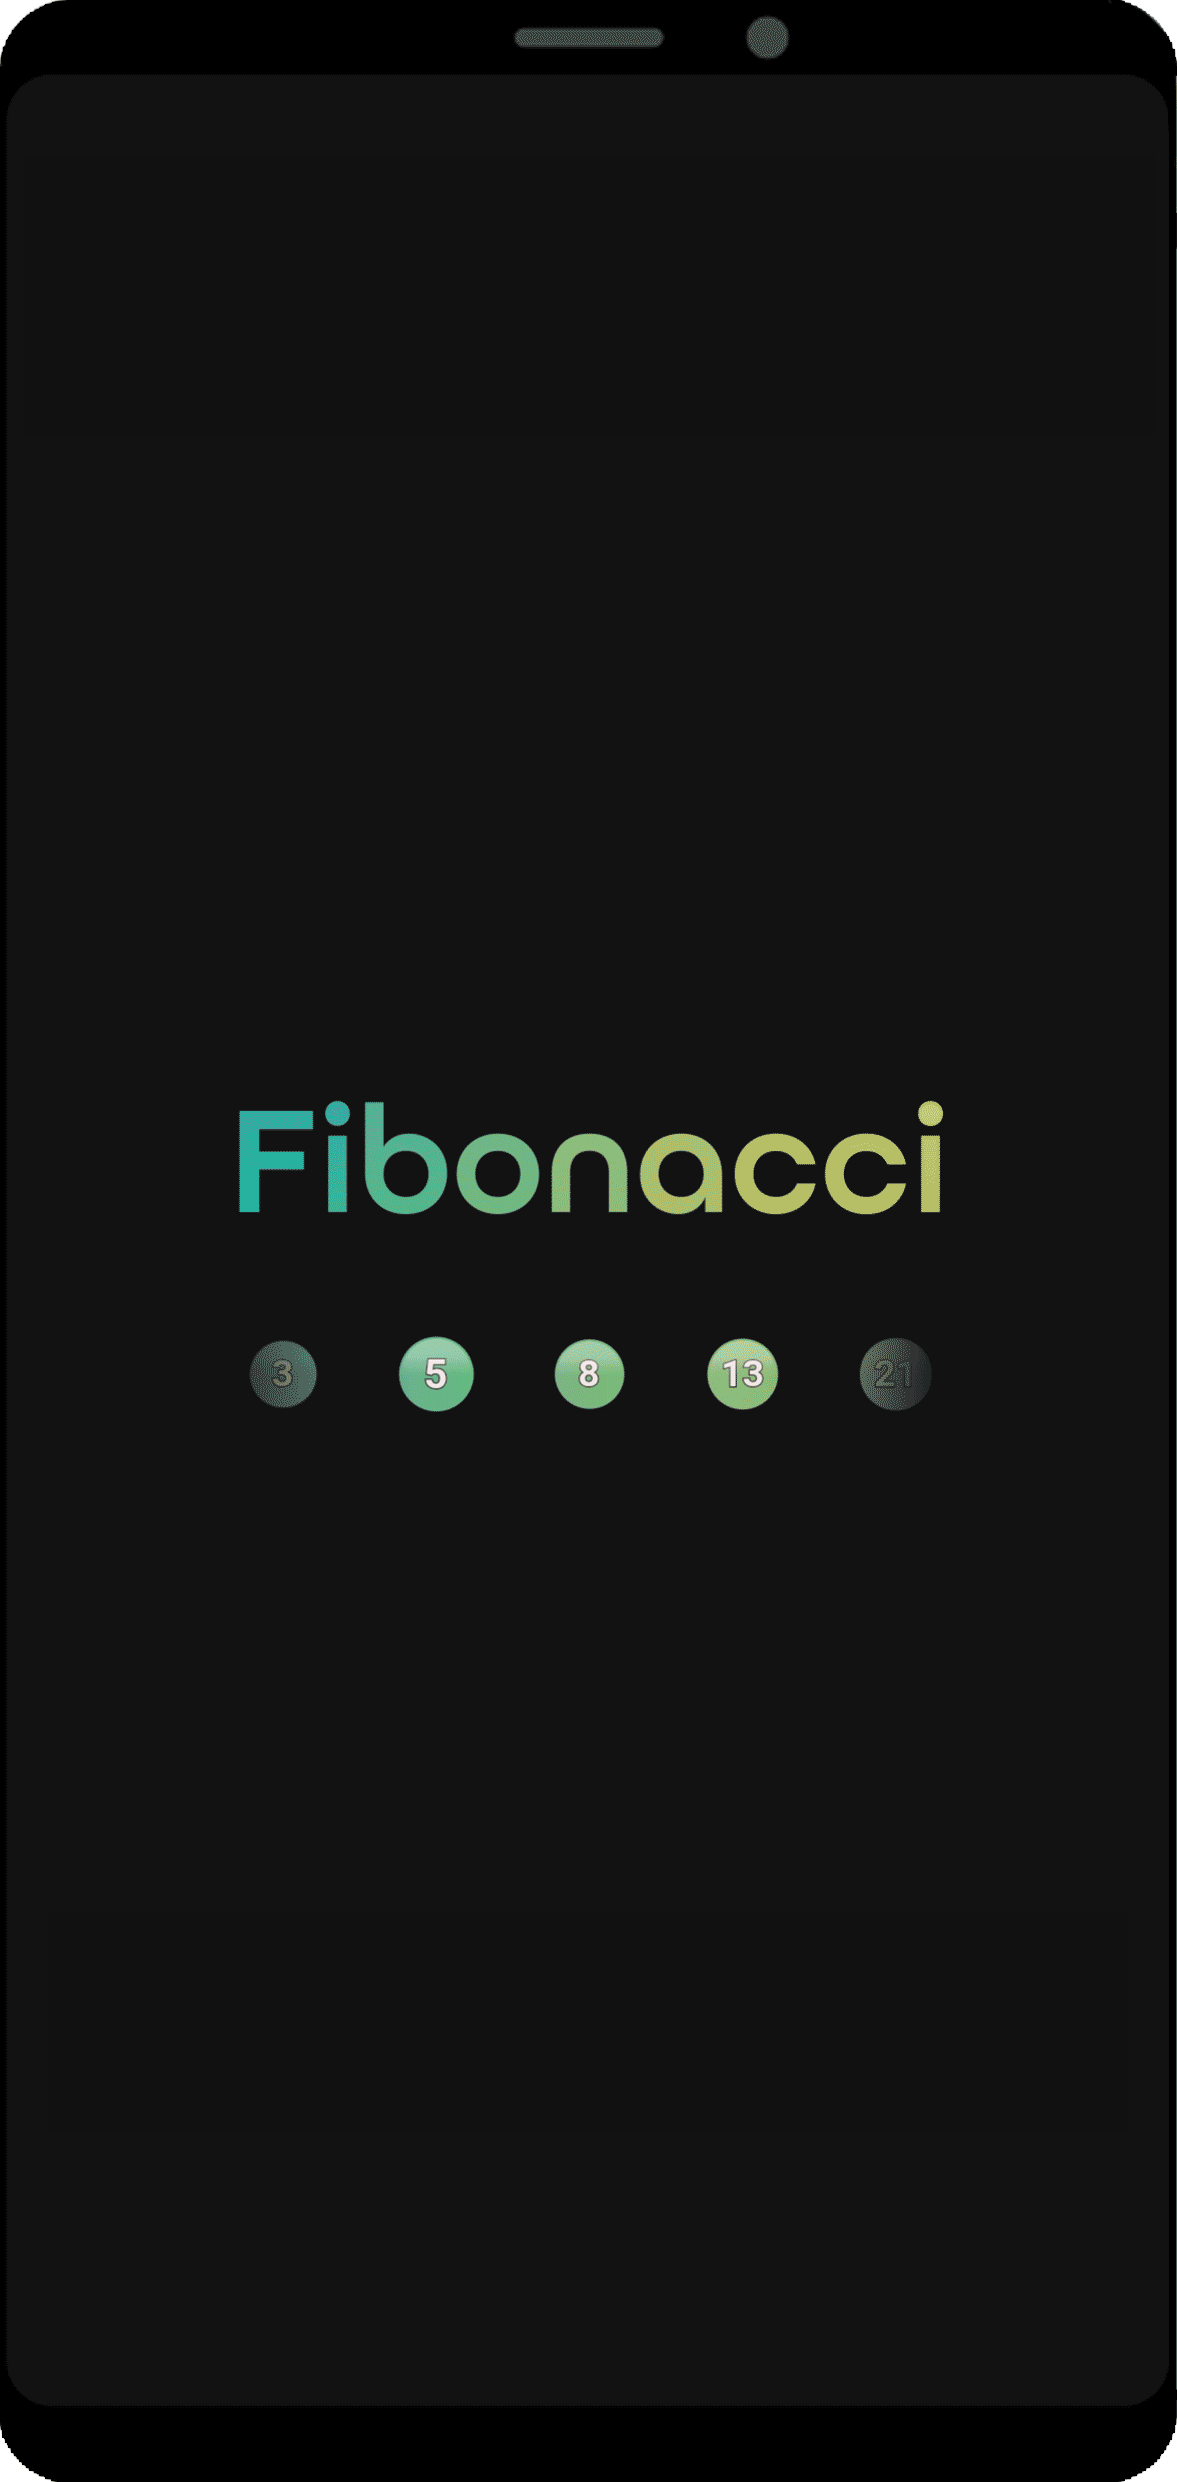 Fibonacci gameplay animation